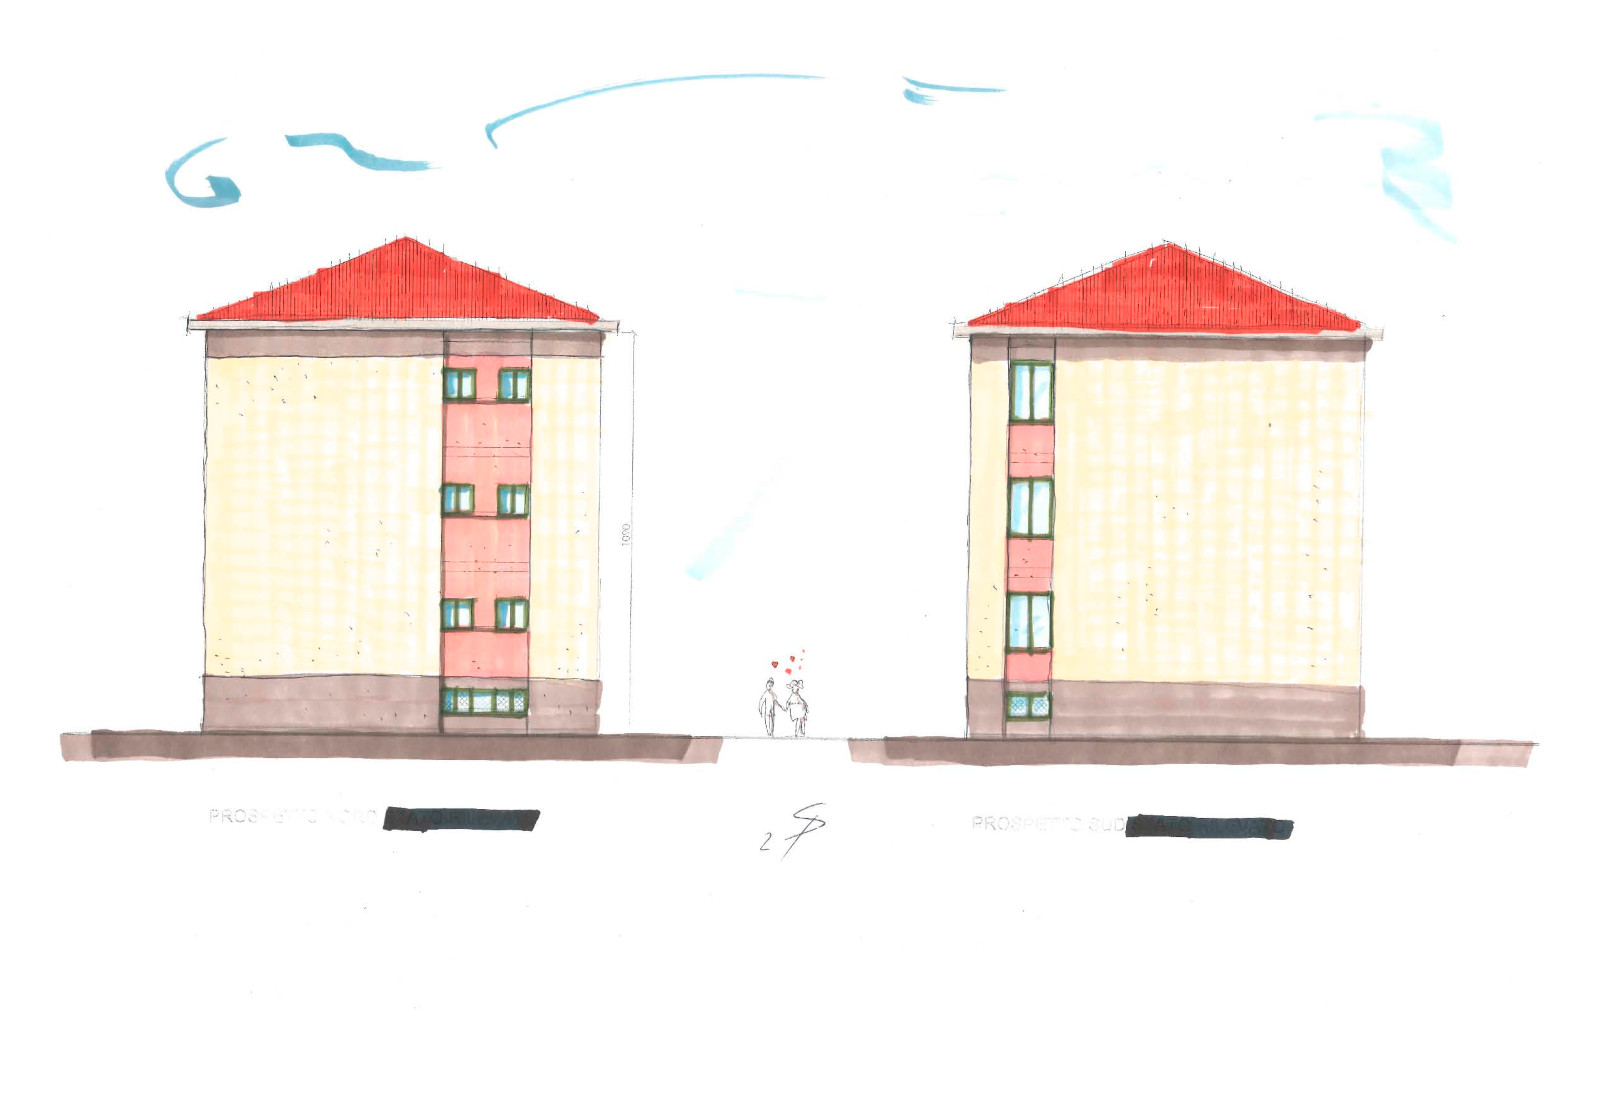 Residential ensemble (energy upgrading), 4 Volta street, Lainate - Side elevations sketch